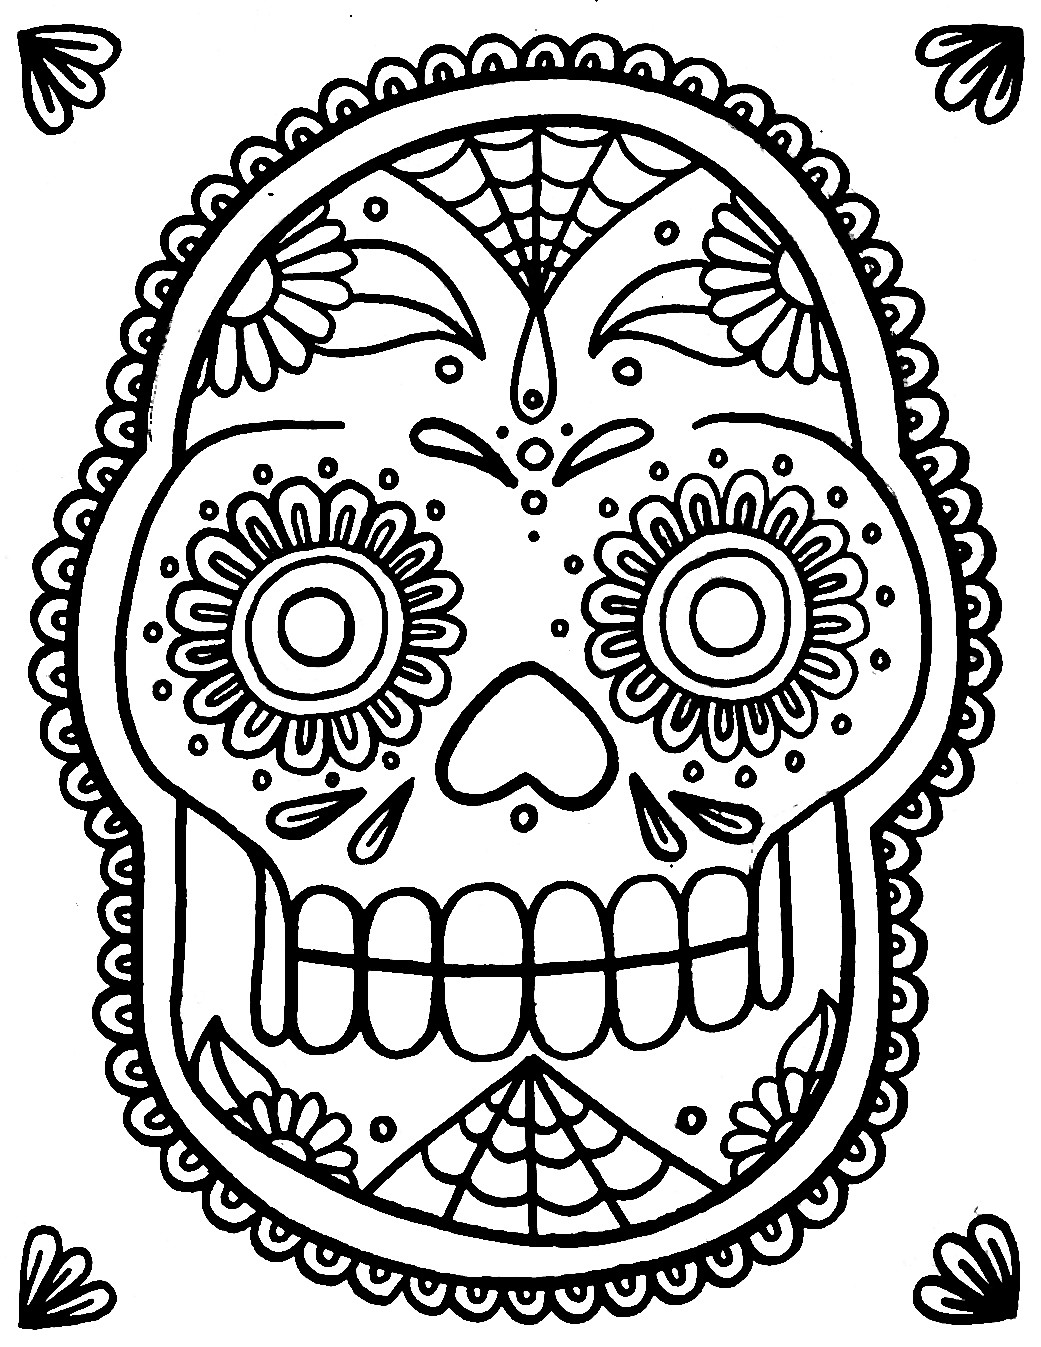 Printable Sugar Skull Coloring Pages
 Yucca Flats N M Wenchkin s Coloring Pages Sugar Skull